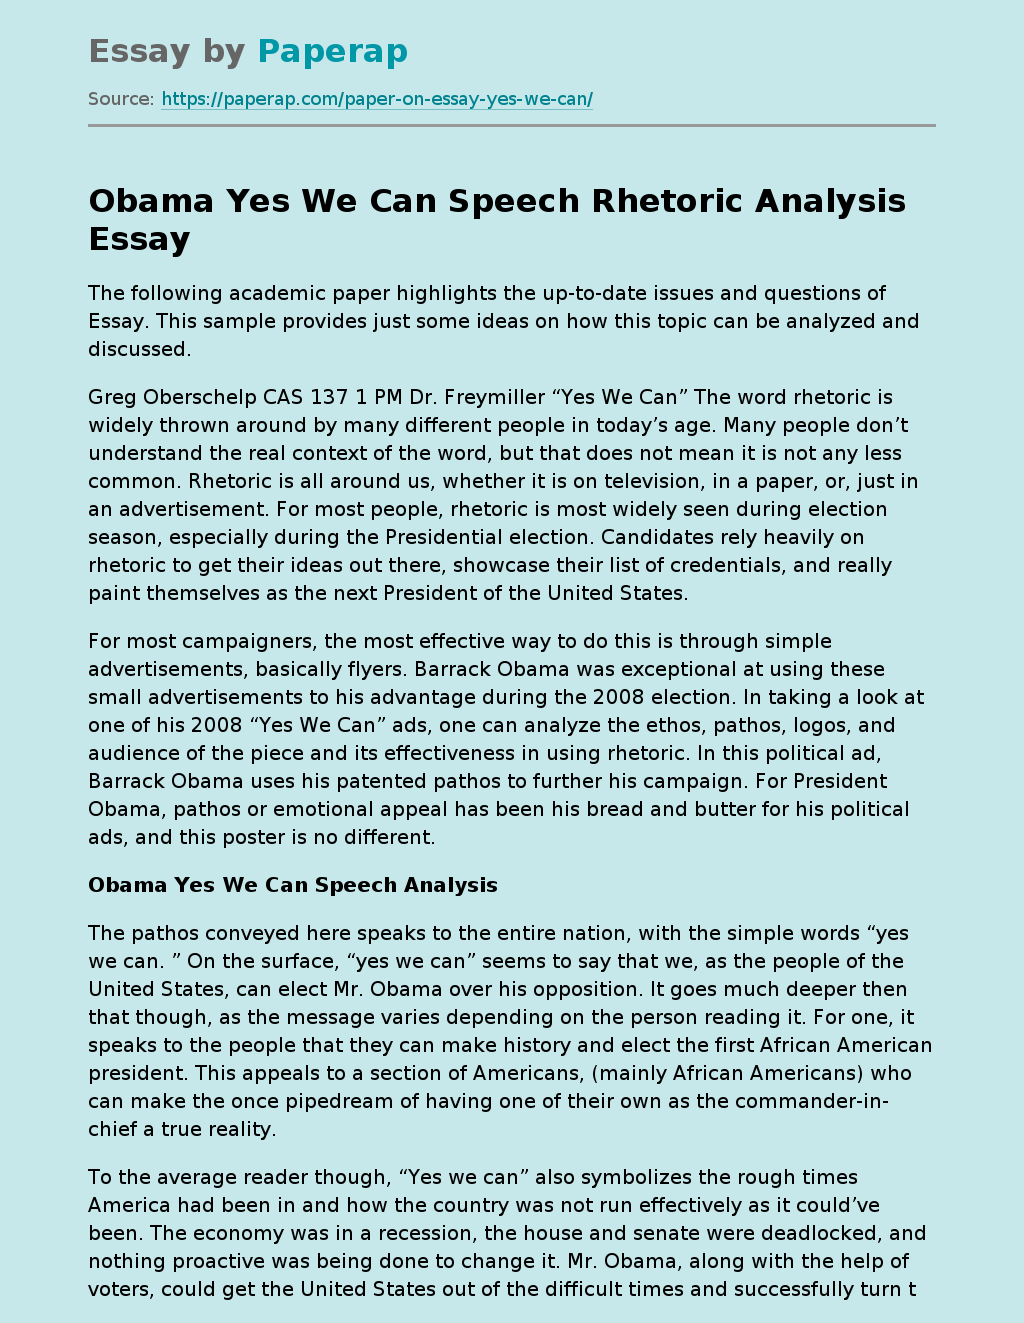 Obama Yes We Can Speech Rhetoric Analysis